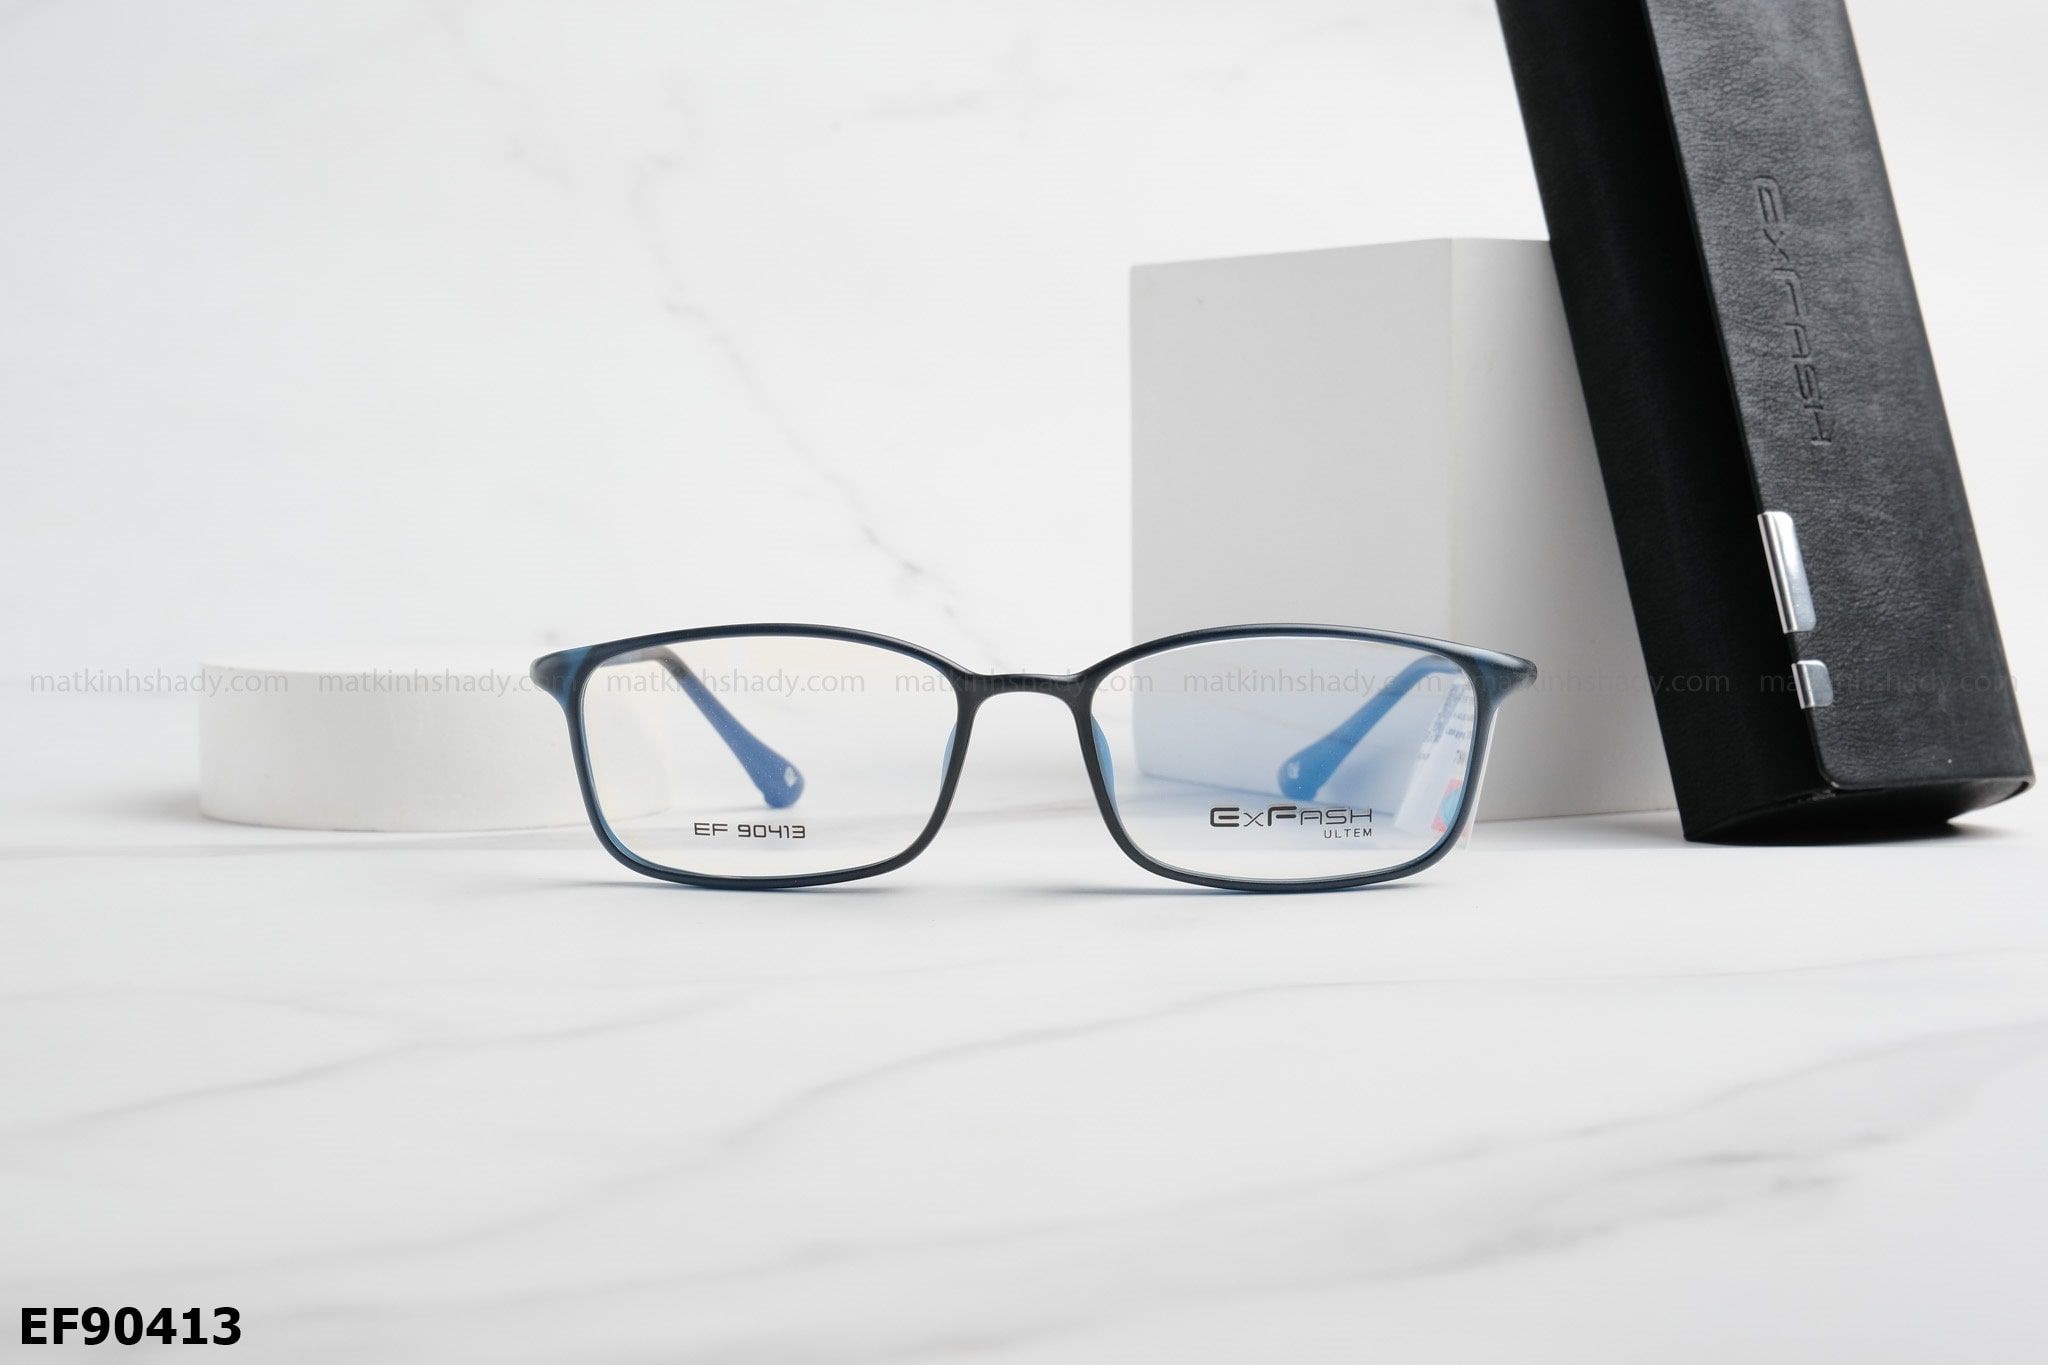  Exfash Eyewear - Glasses - EF90413 